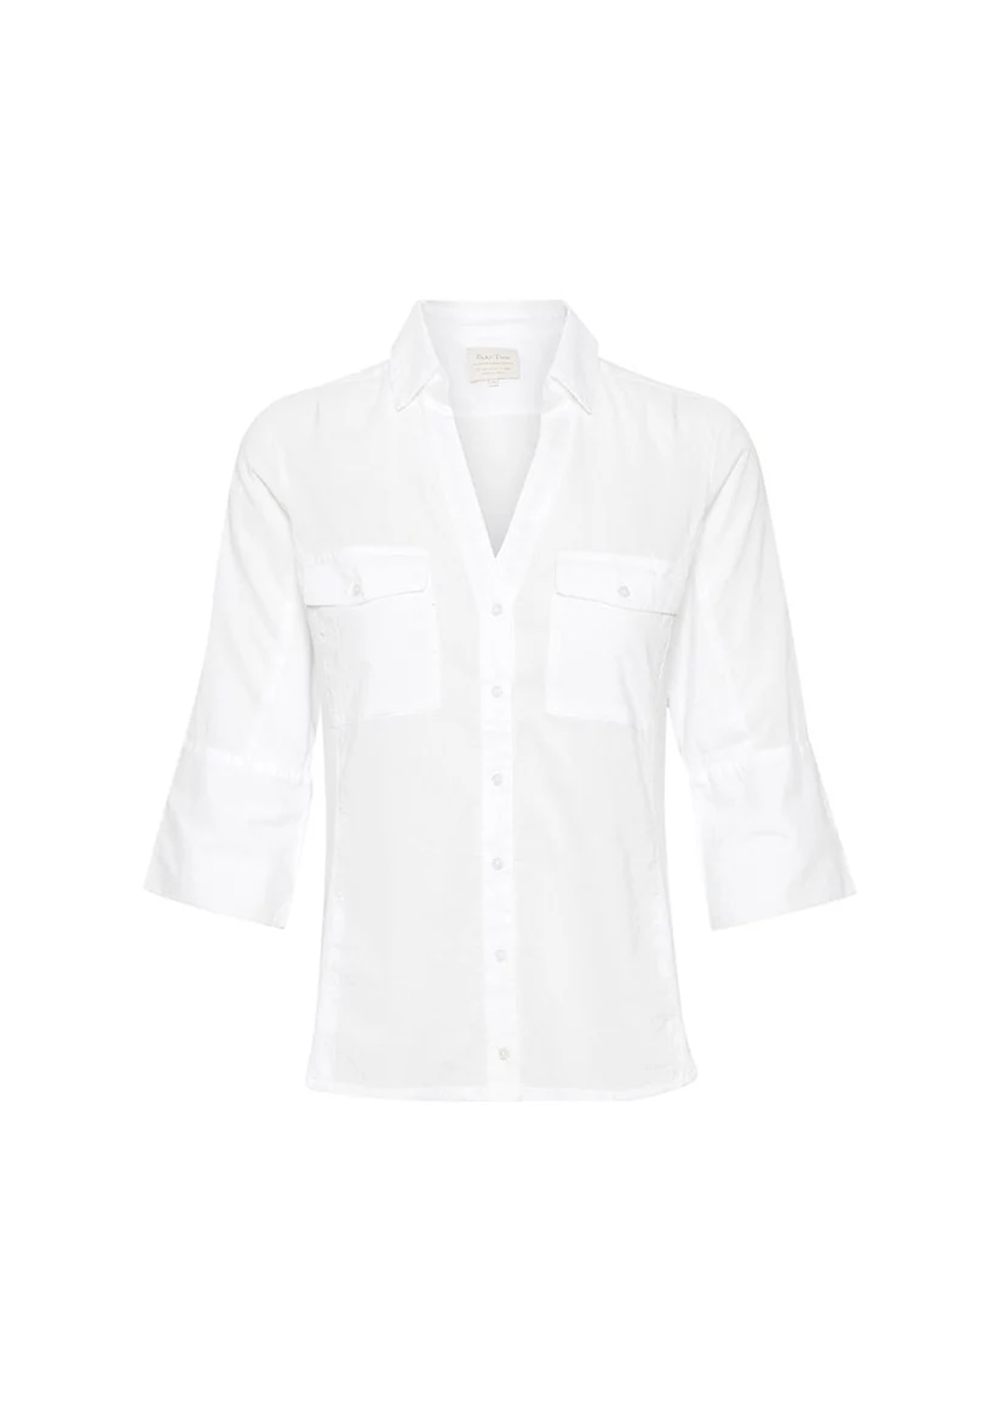 Cortnia Shirt - White - Part Two - Danali - Canada